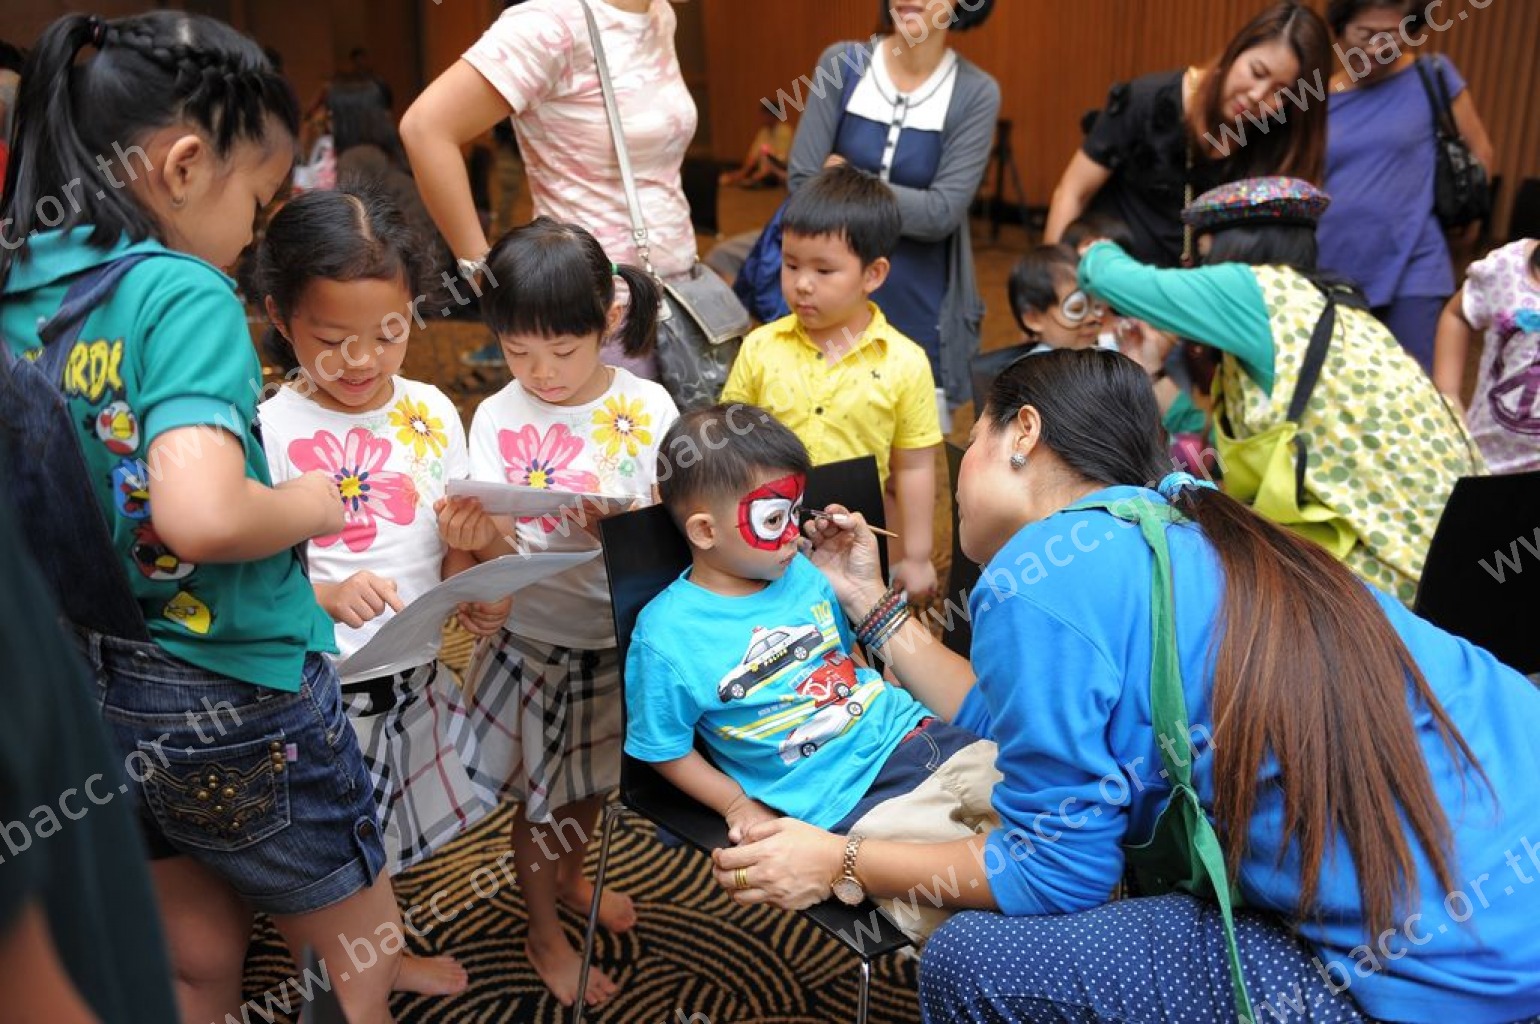 Storytelling Activity for Kids “Kaew the Naughty: Happy Birthday By H.R.H. Princess Maha Chakri Sirindhorn”